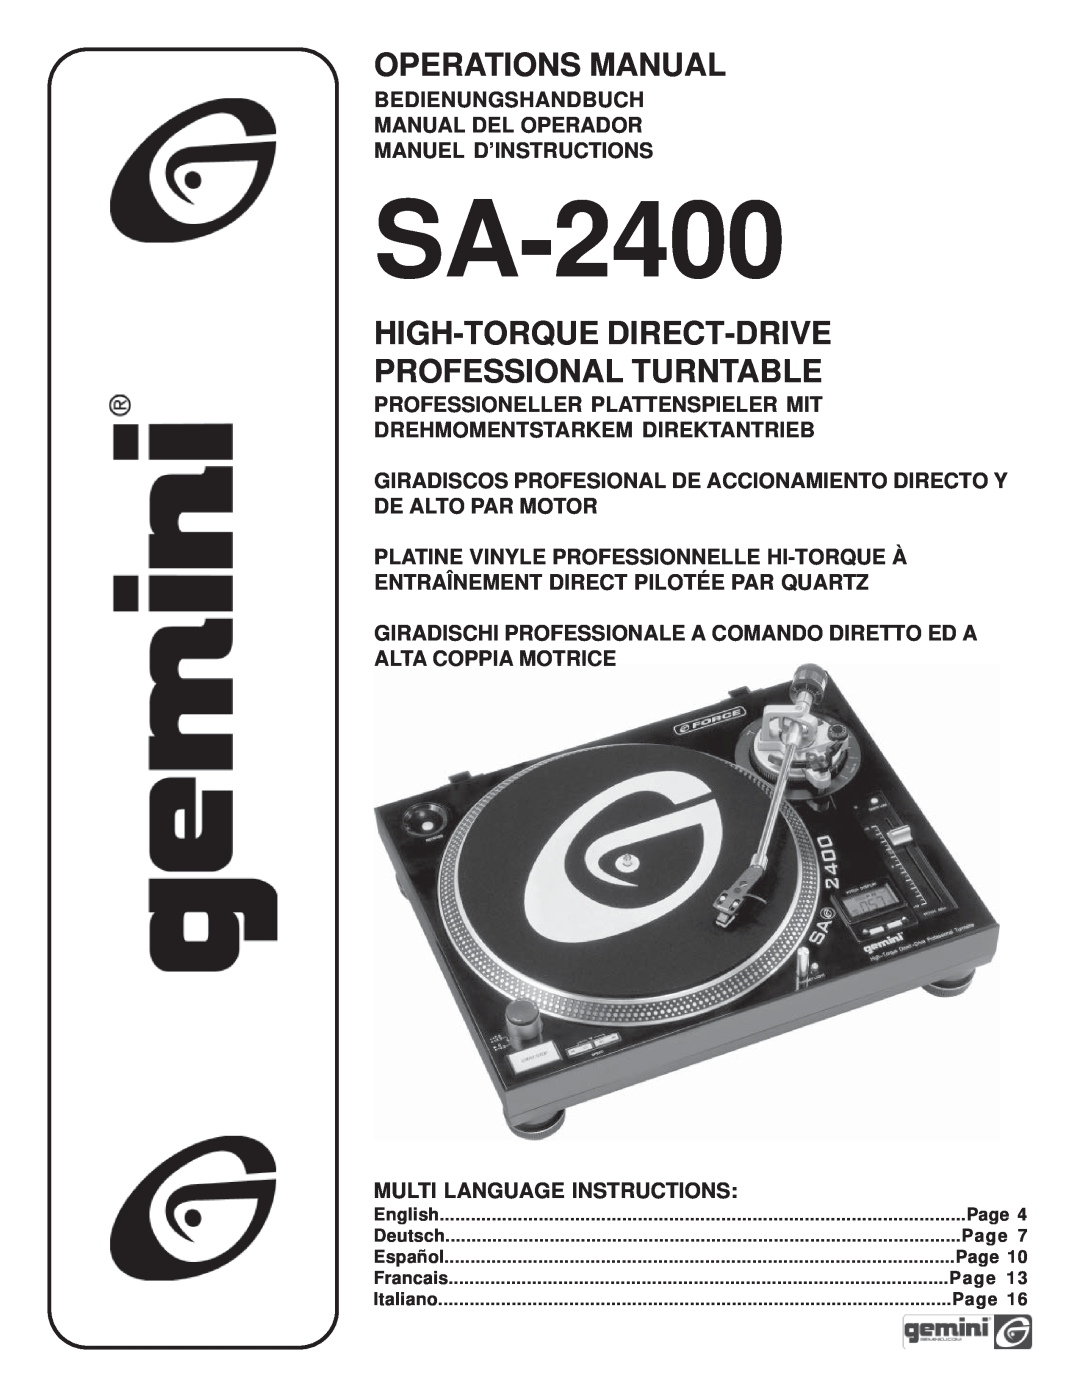 Gemini SA-2400 manual Operations Manual, High-Torque Direct-Drive Professional Turntable 